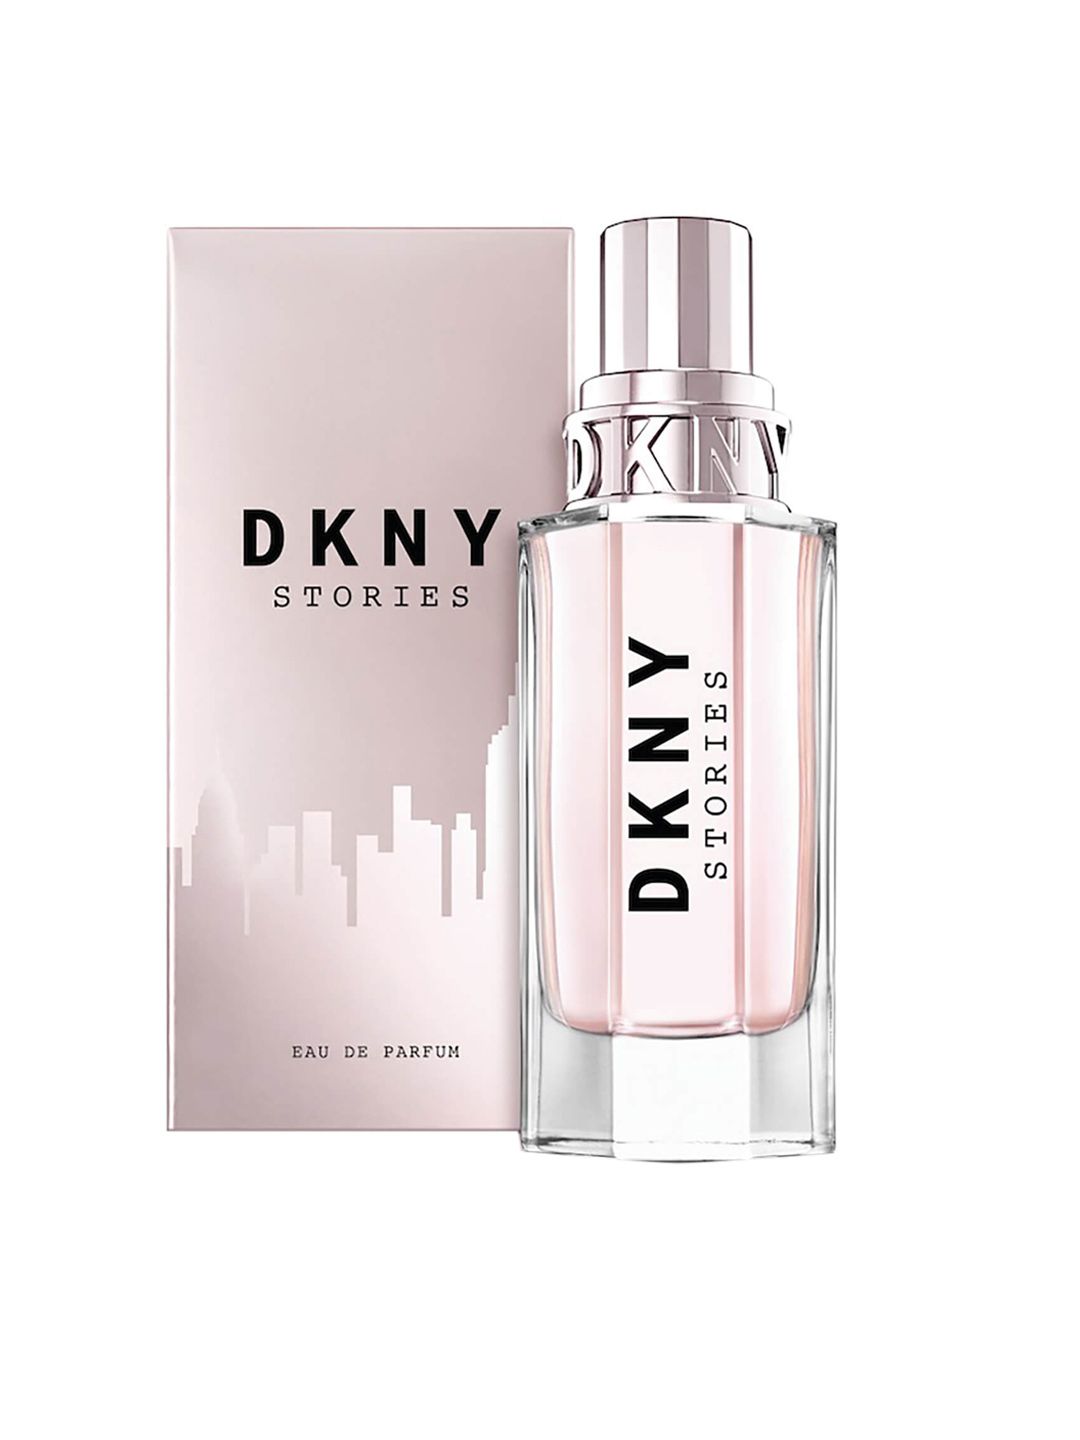 DKNY Women STORIES Eau de Parfum 50 ml Price in India